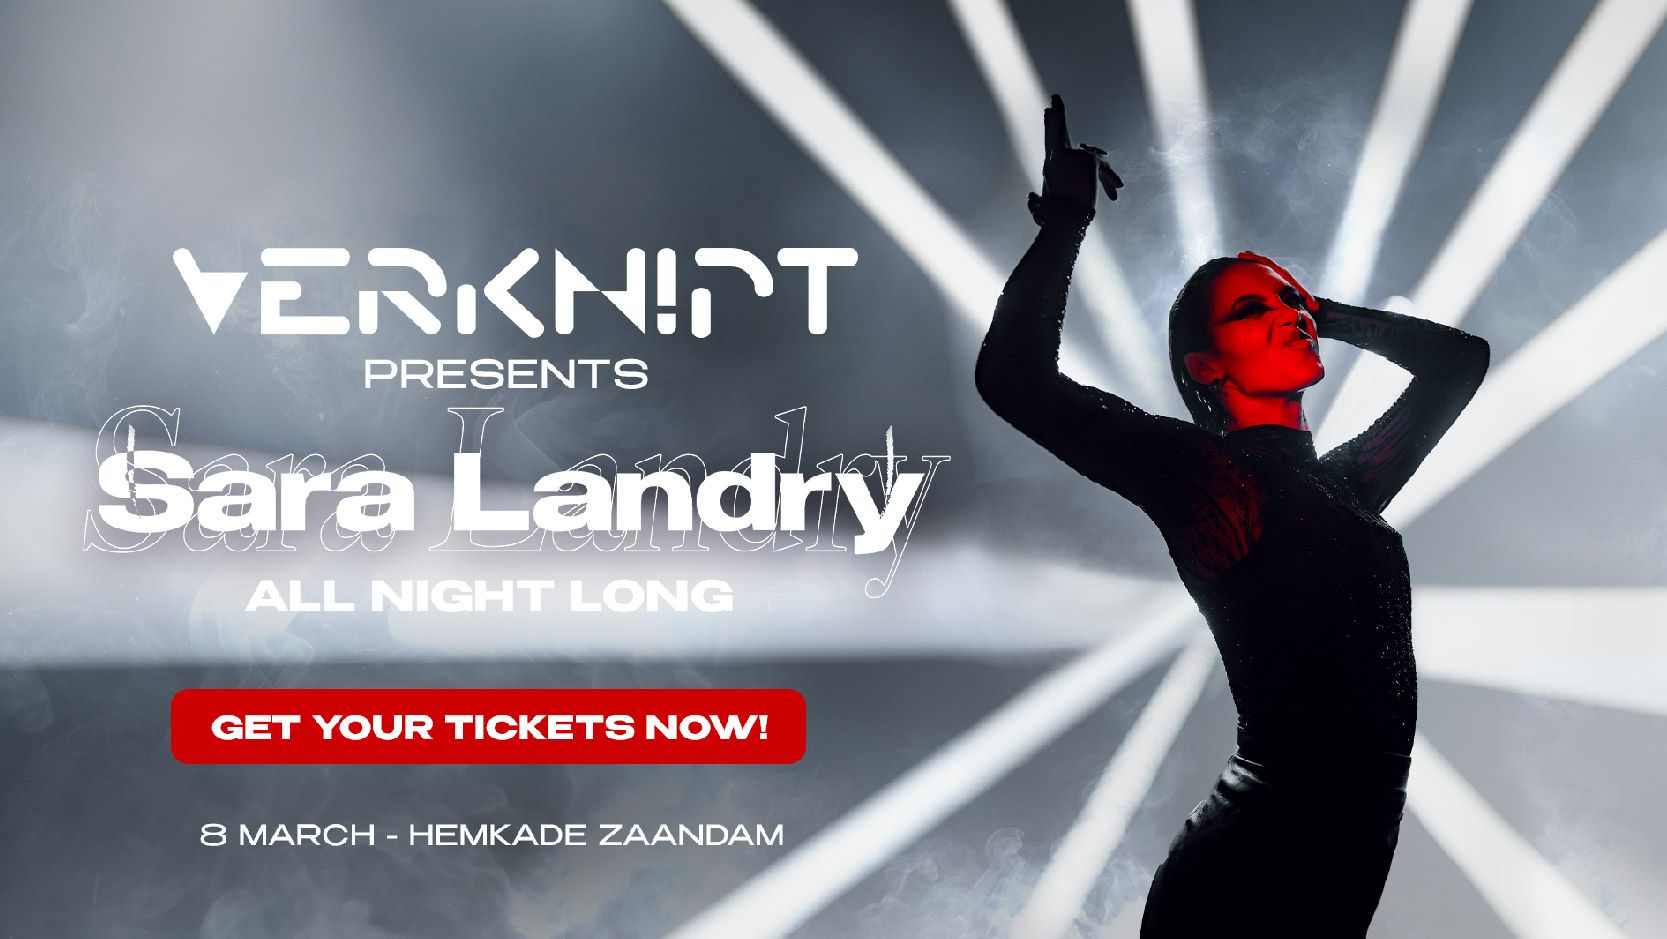 VERKNIPT Presents Sara Landry (all night long) cover